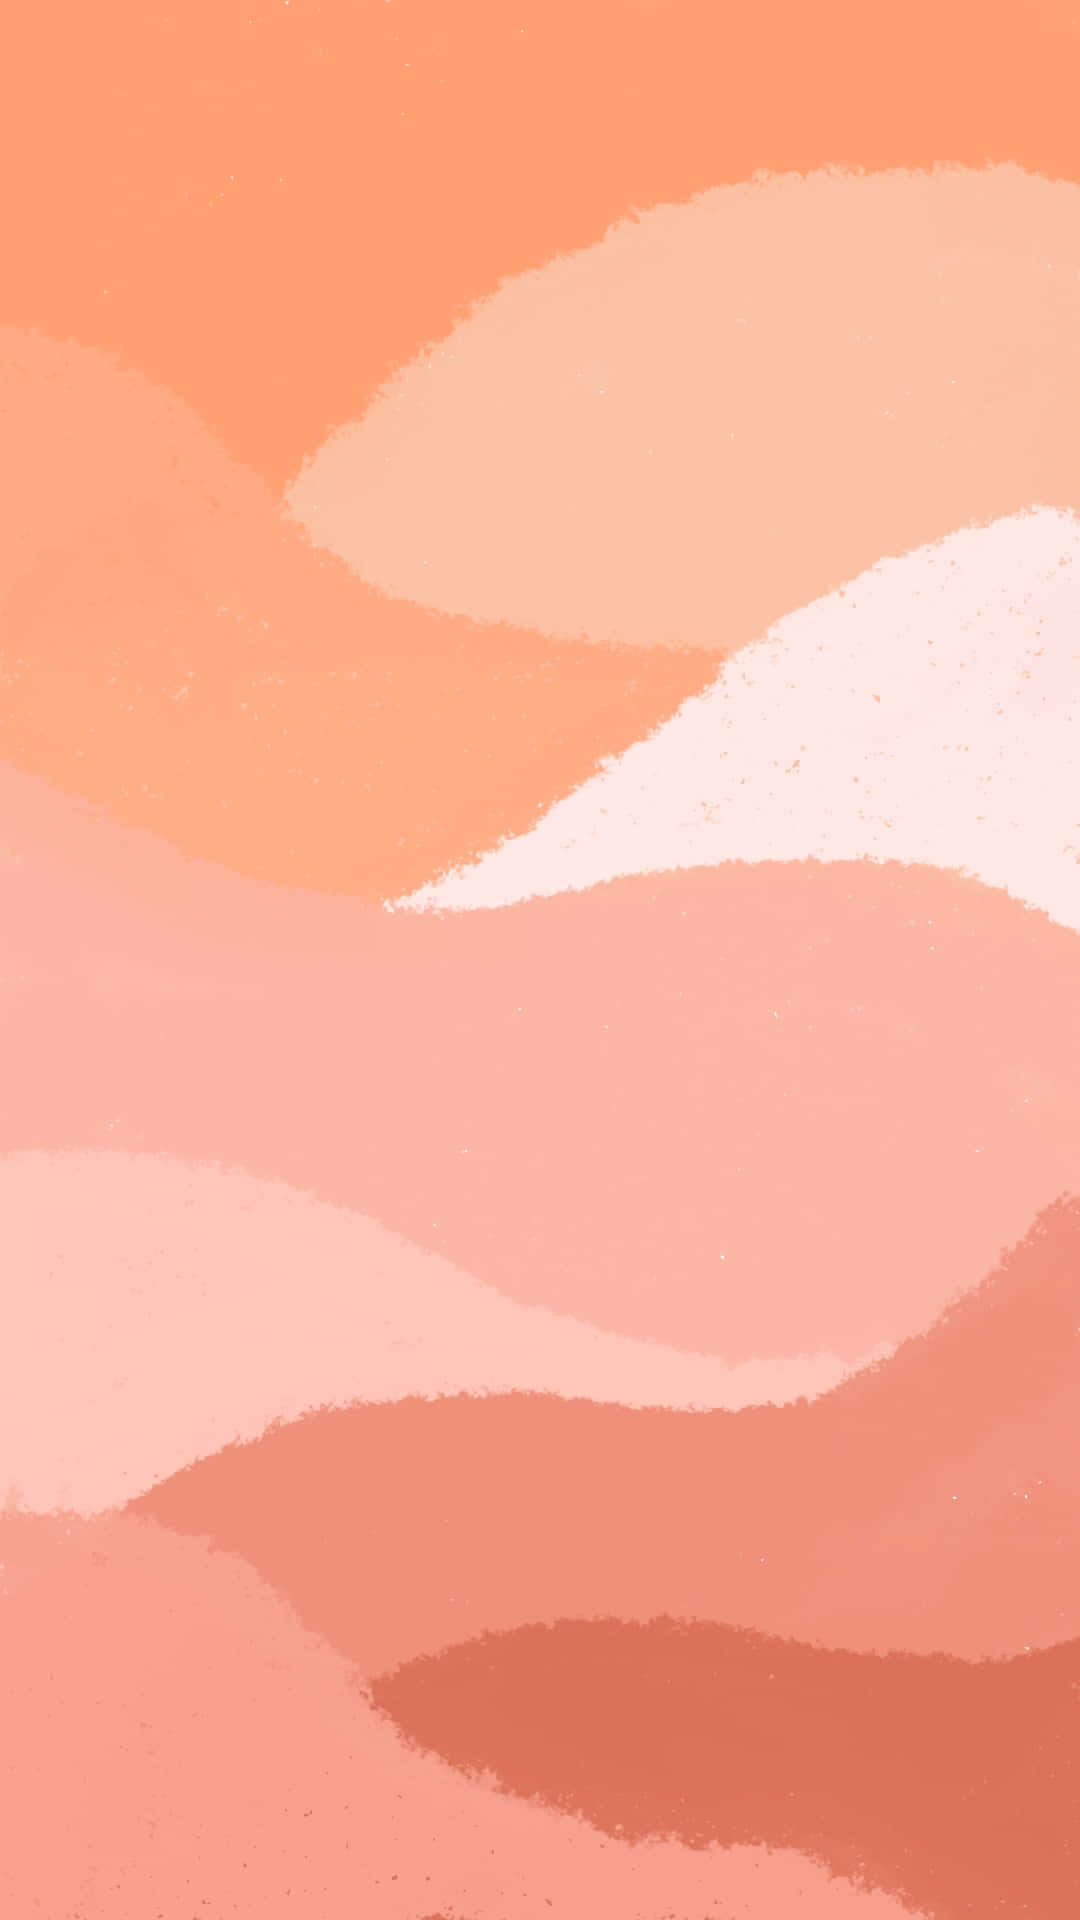 Abstract Pink Orange Waves Artwork Wallpaper